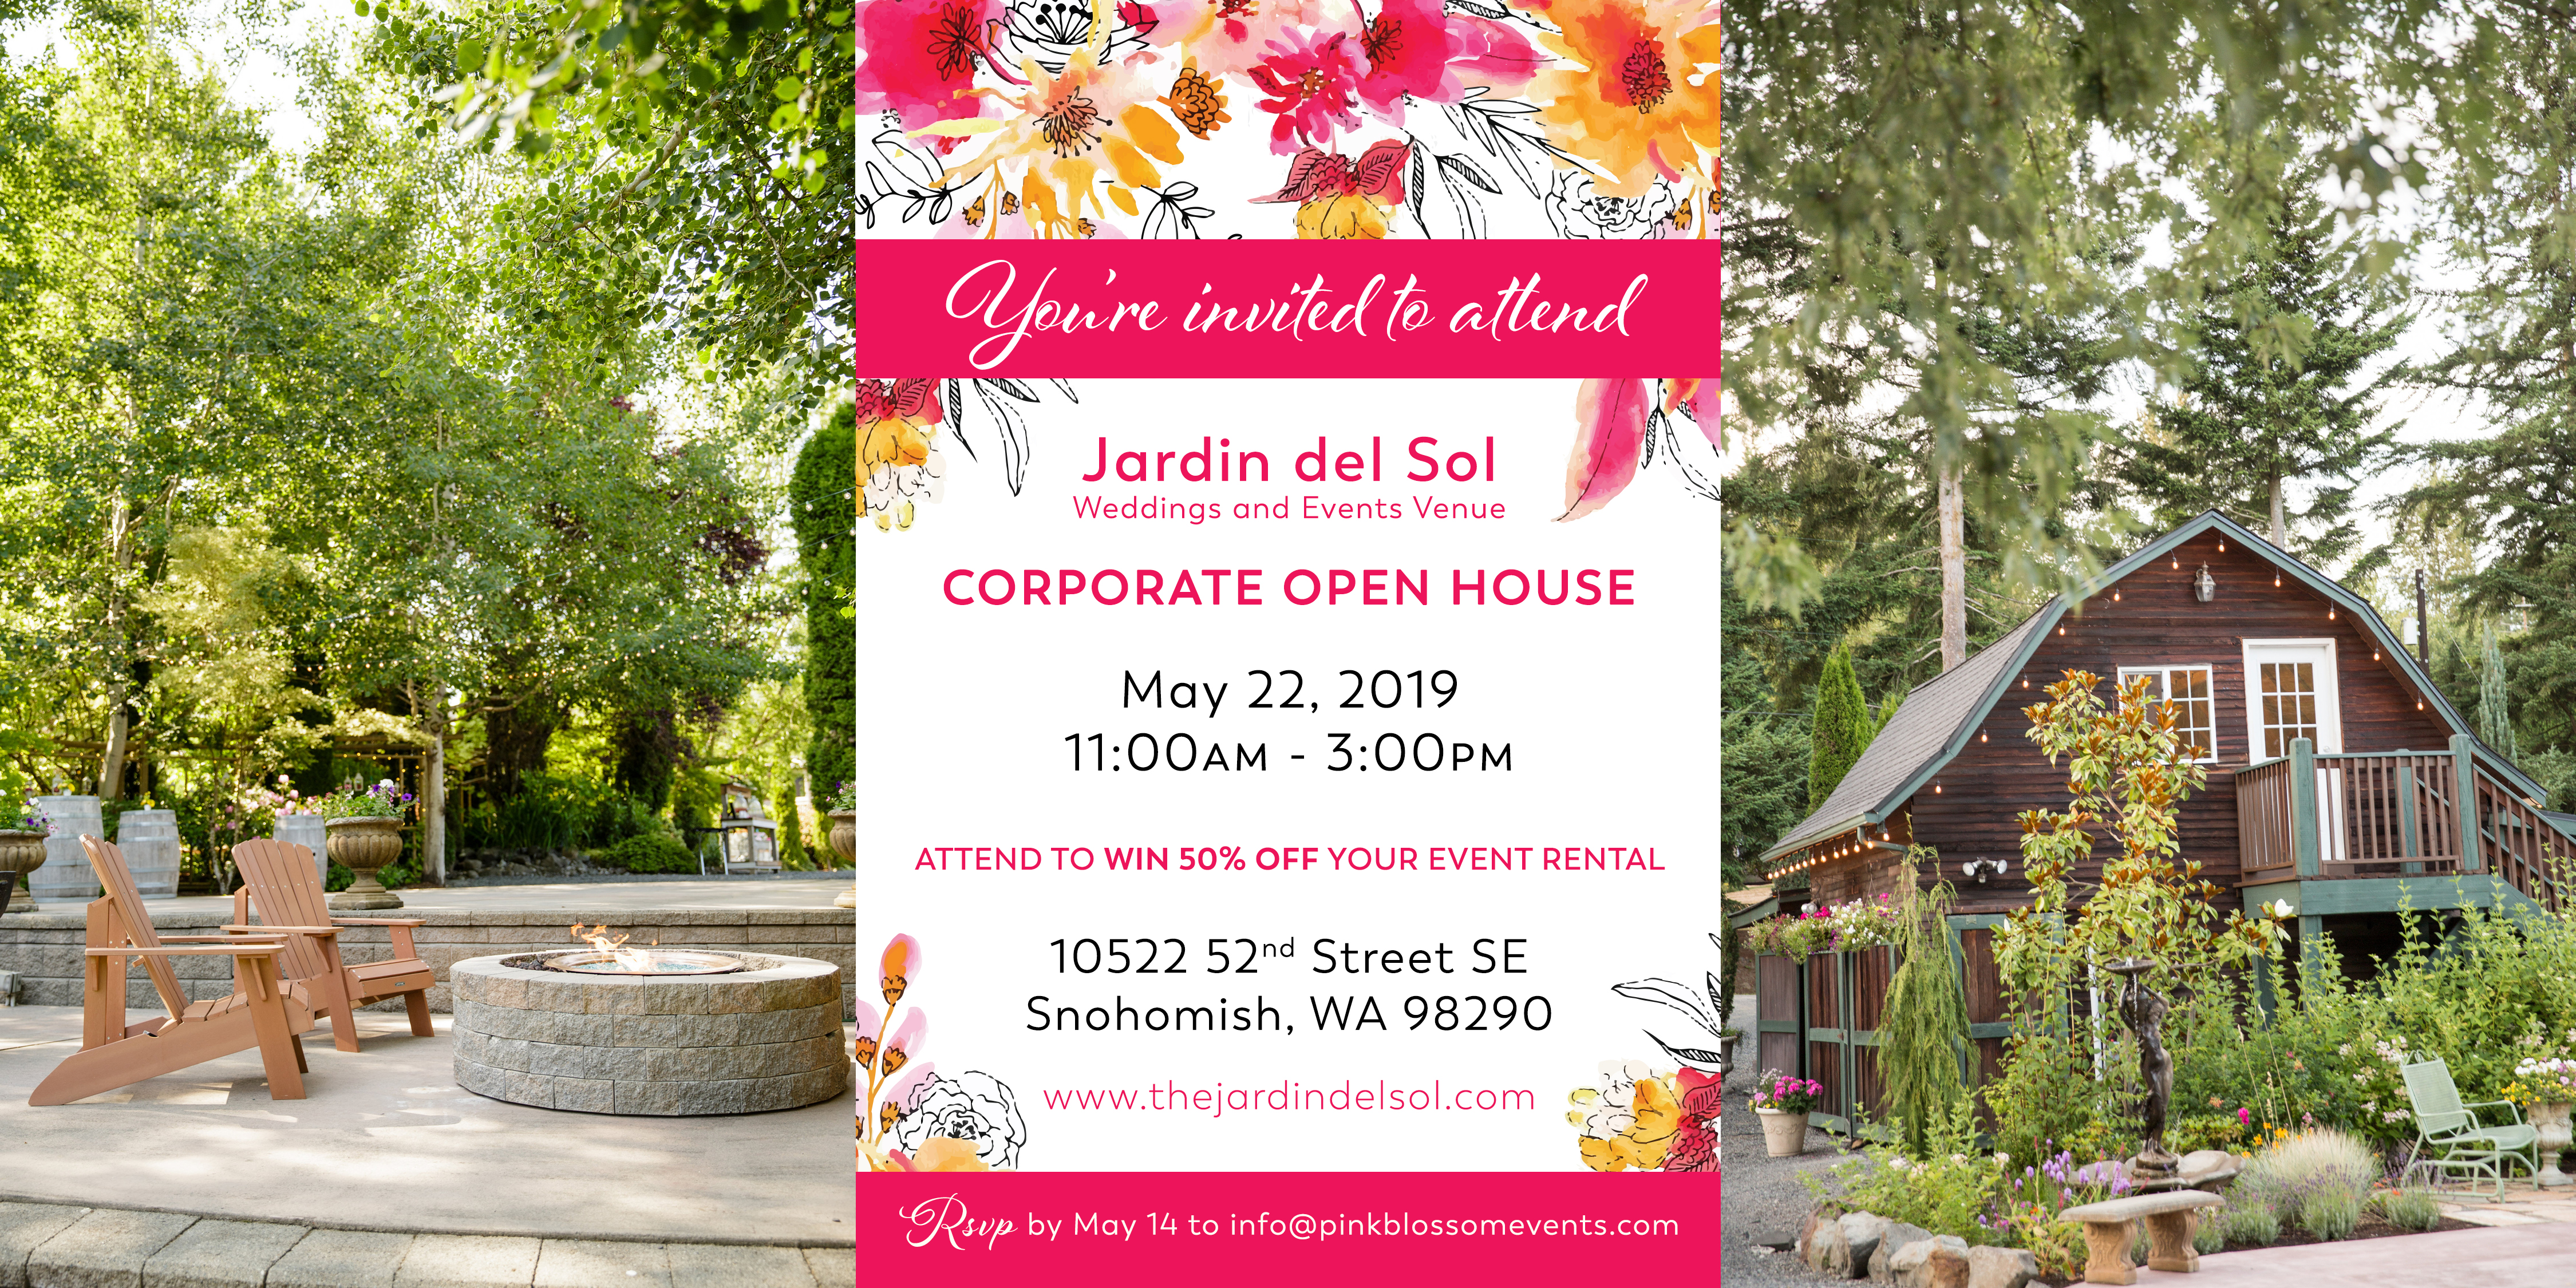 Jardin del Sol Corporate Open House 2019